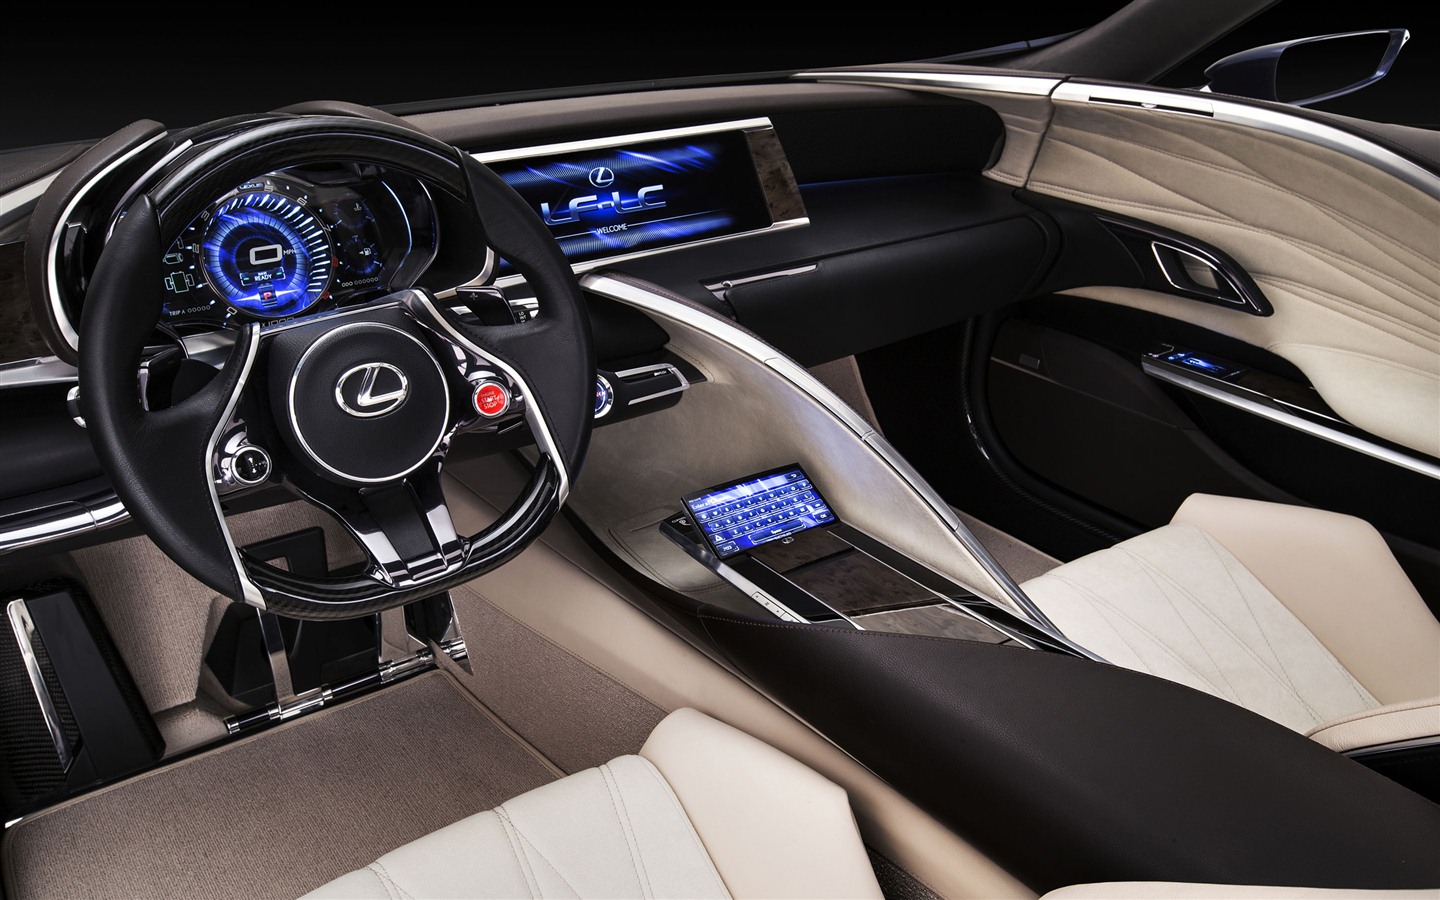 2012 Lexus LF-LC Blue concept 雷克萨斯 蓝色概念车 高清壁纸14 - 1440x900